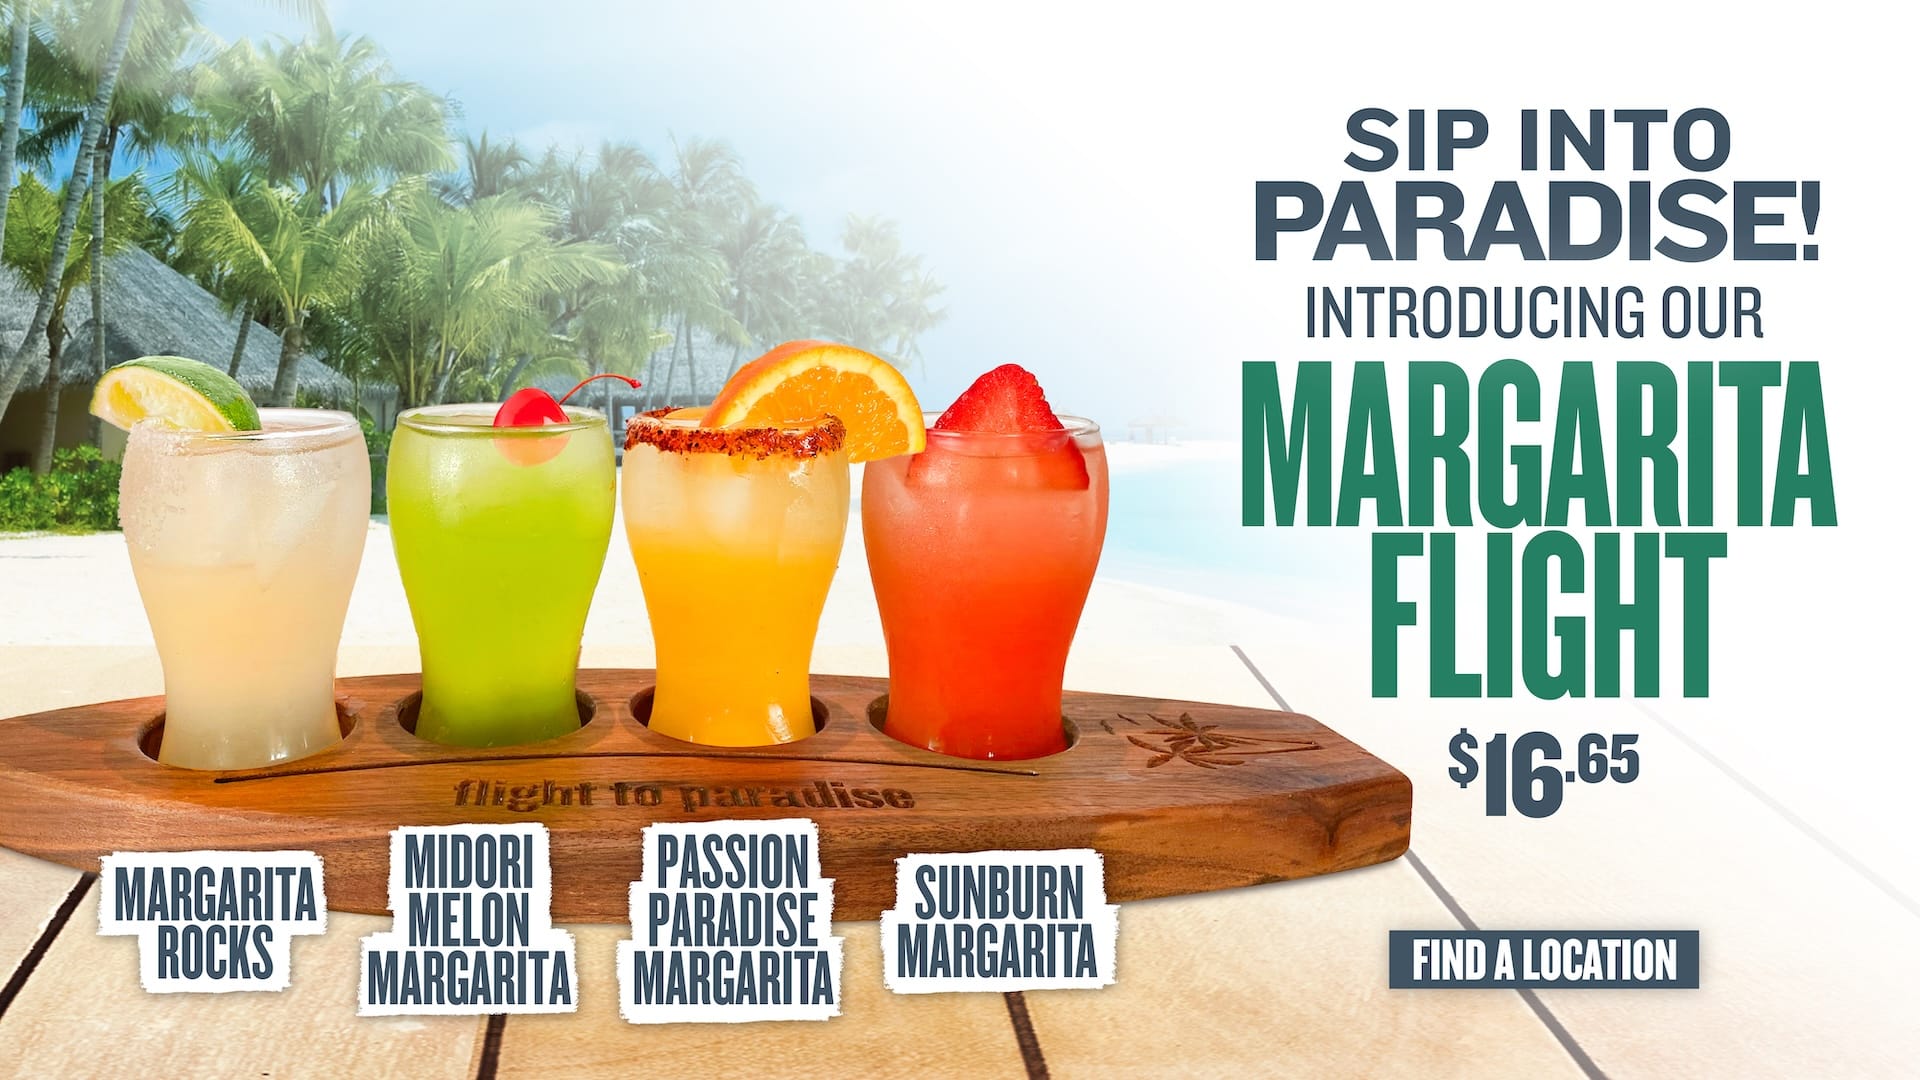 Sip into Paradise introducing our margarita flight $16.65 - Margartia Rocks - Midori Melon Margarita - Passion Paradise Margarita - Sunburn Margarita - Find a Location